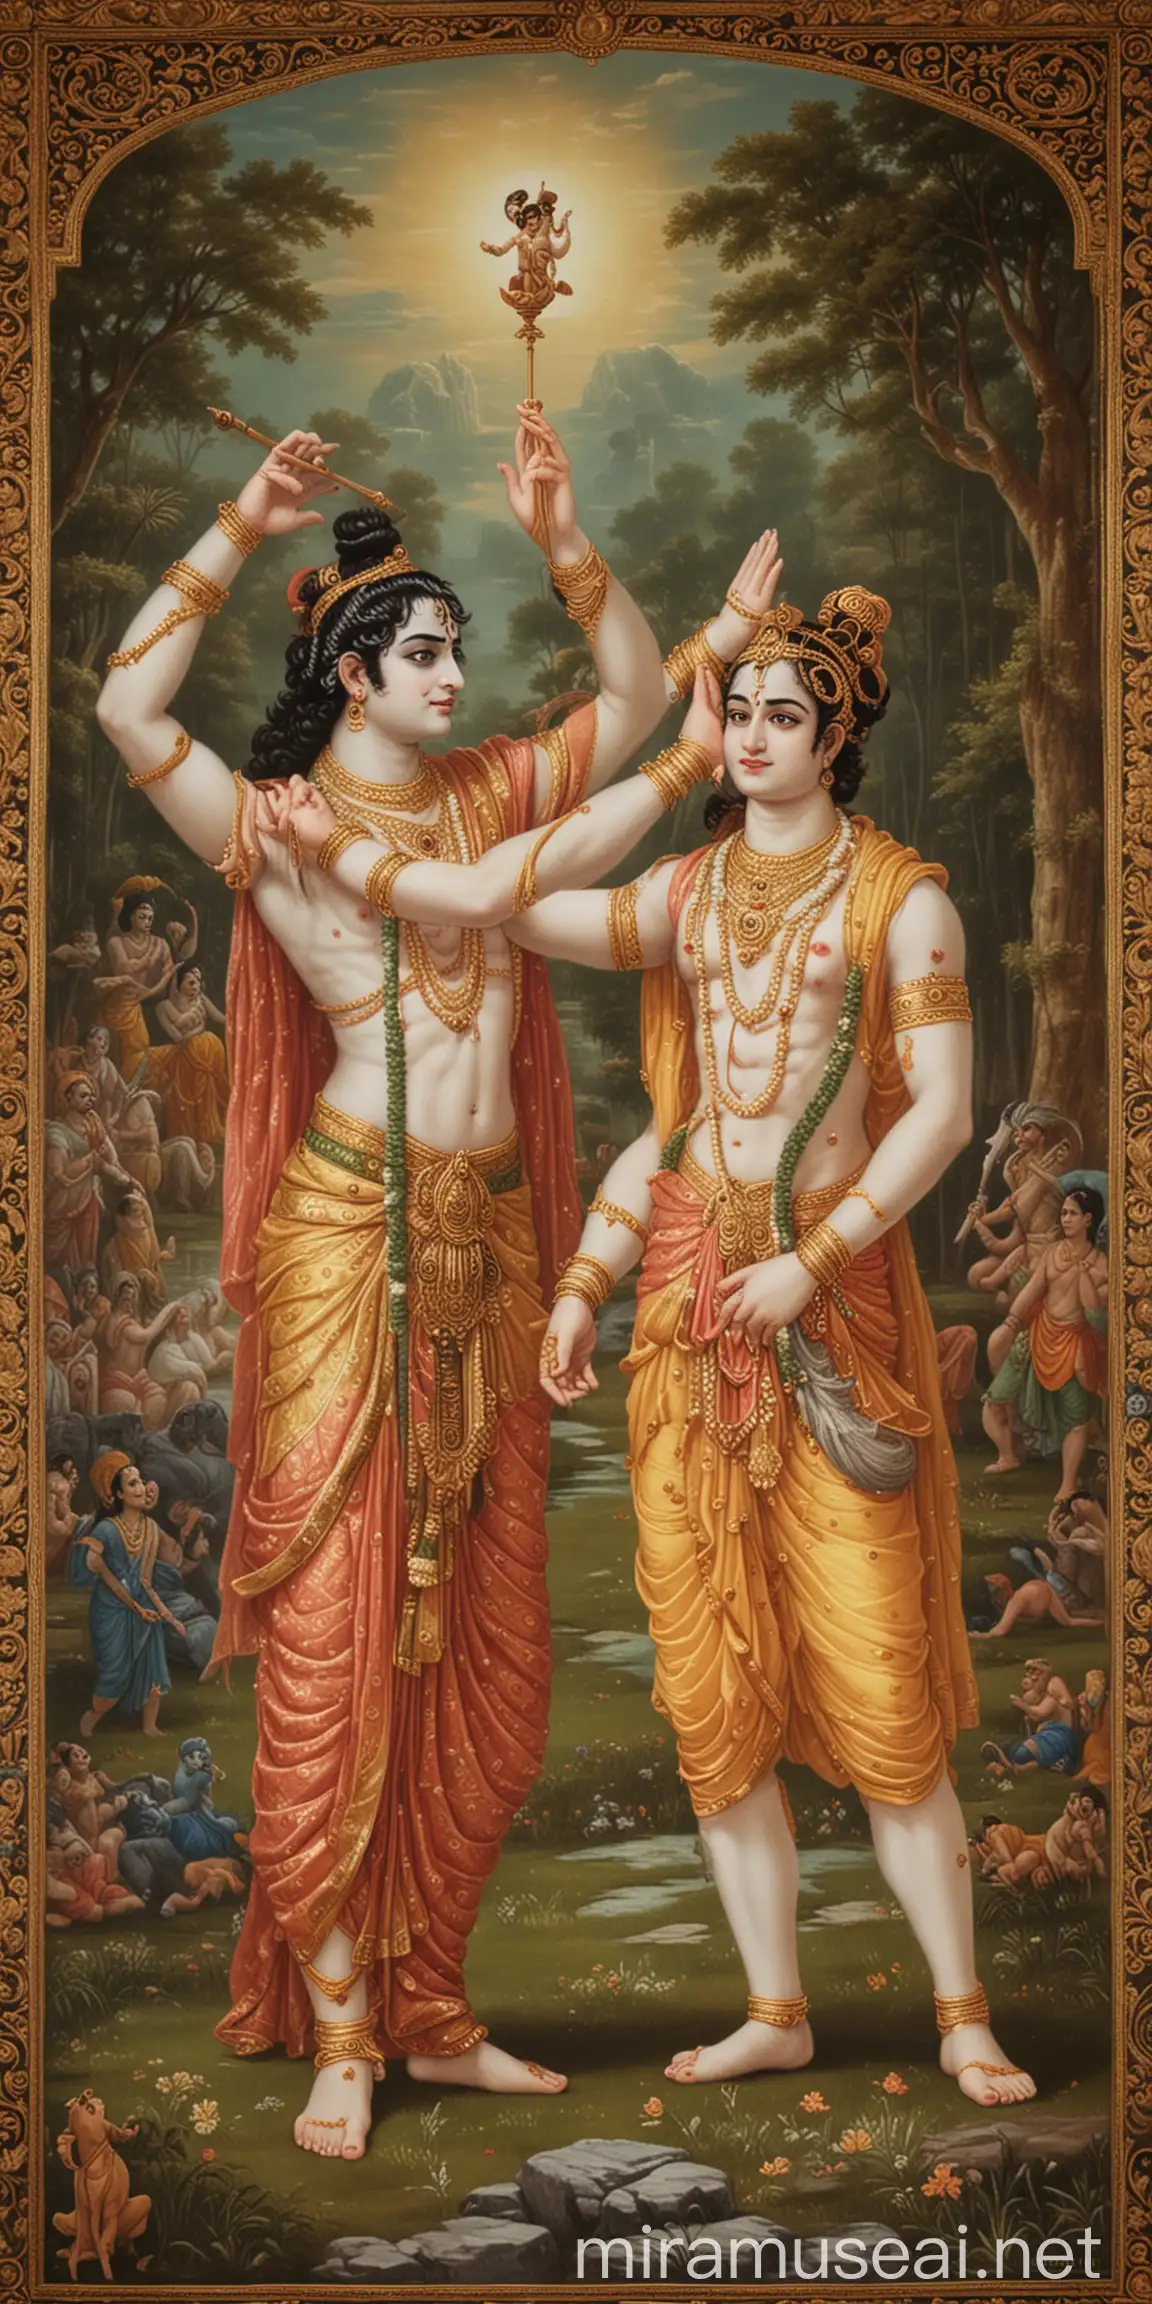 Krishna Teaching Arjuna the Art of War in the Mahabharata Epic